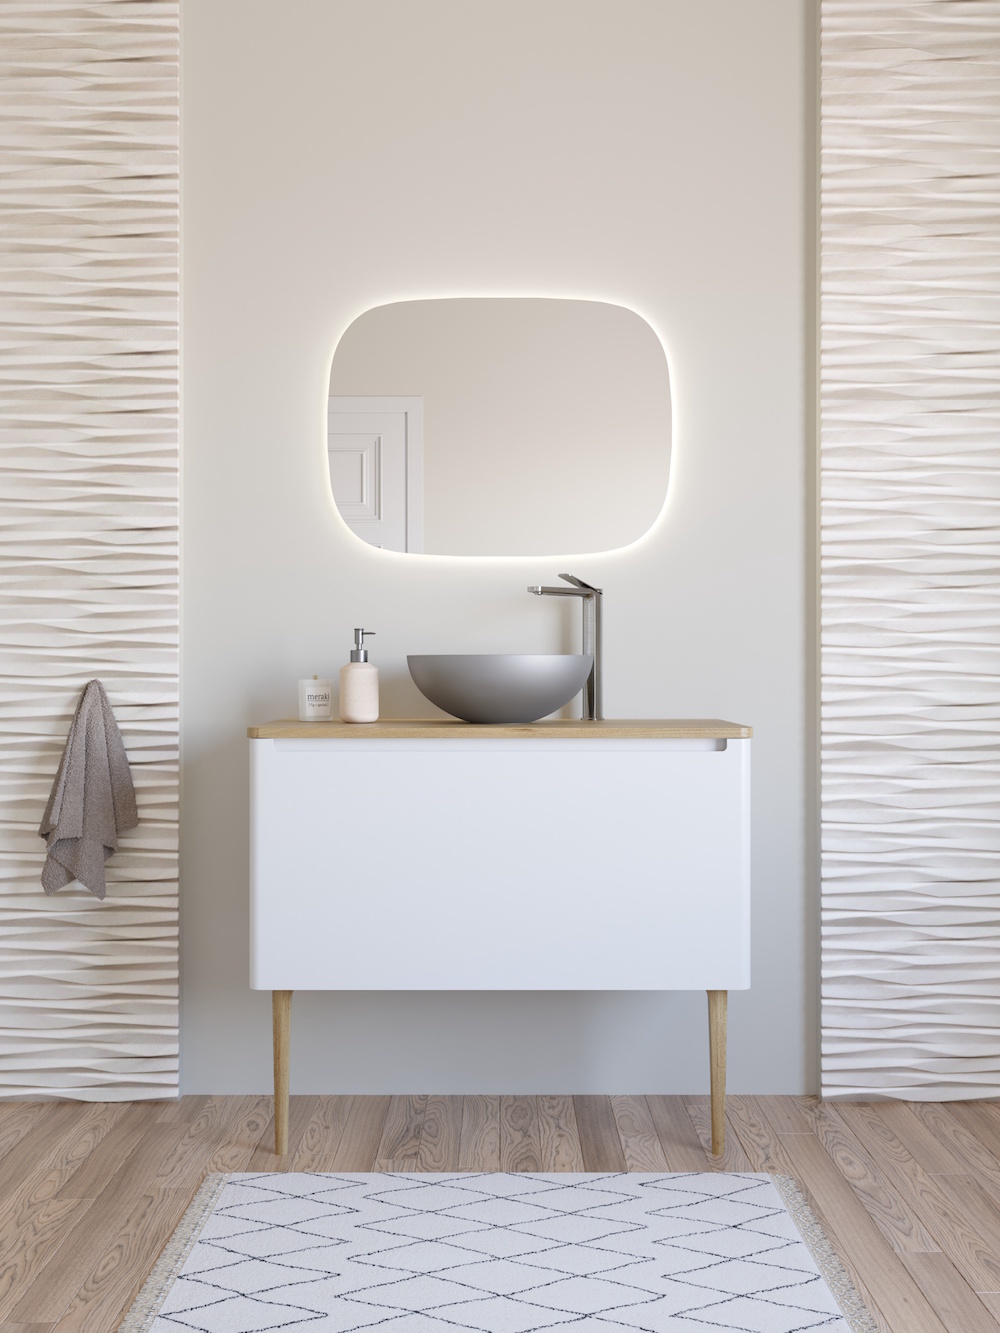 Modern bathroom with lighted mirror